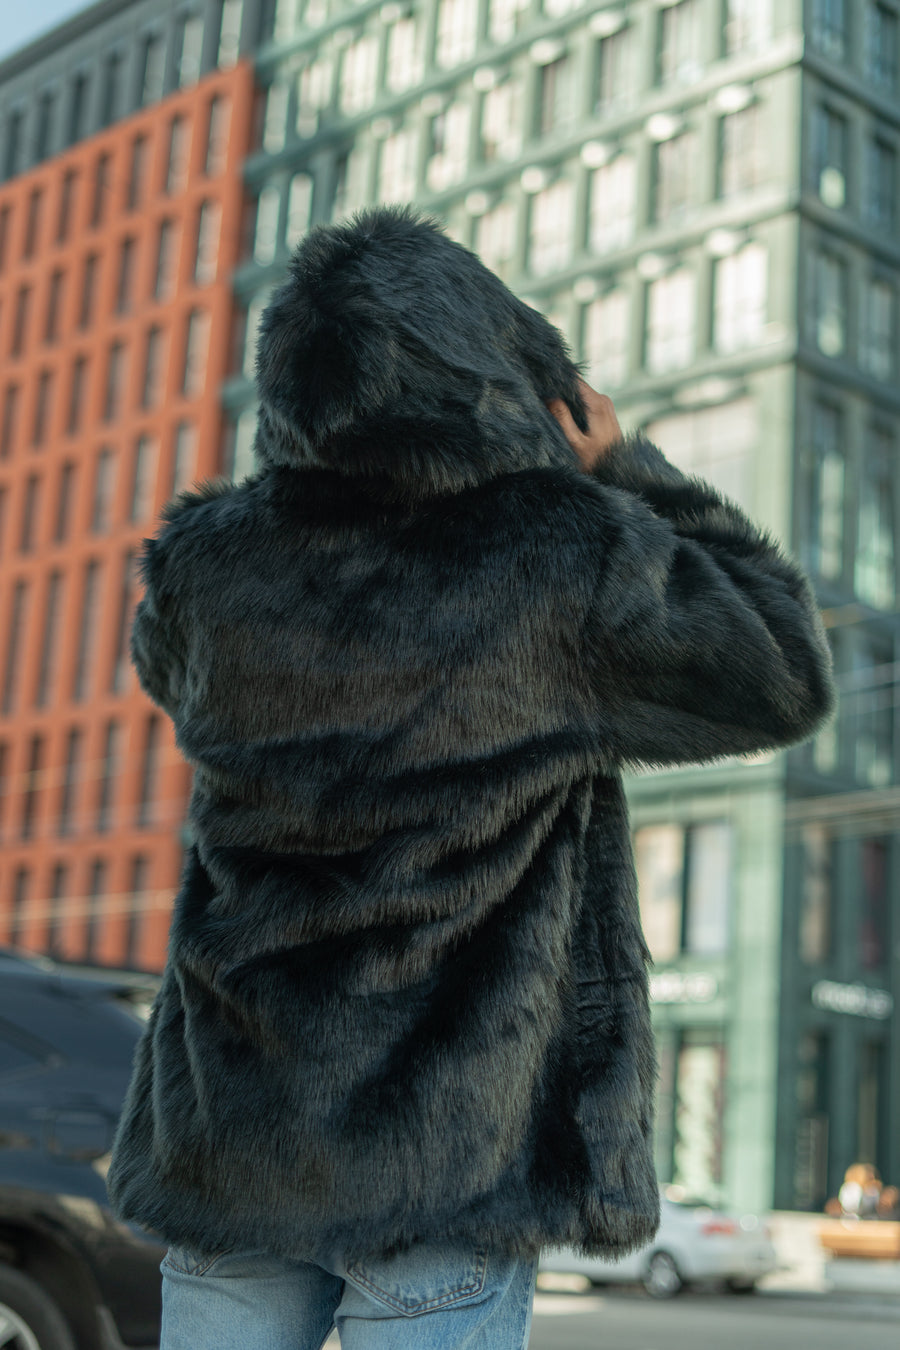 Black wolf hooded jacket